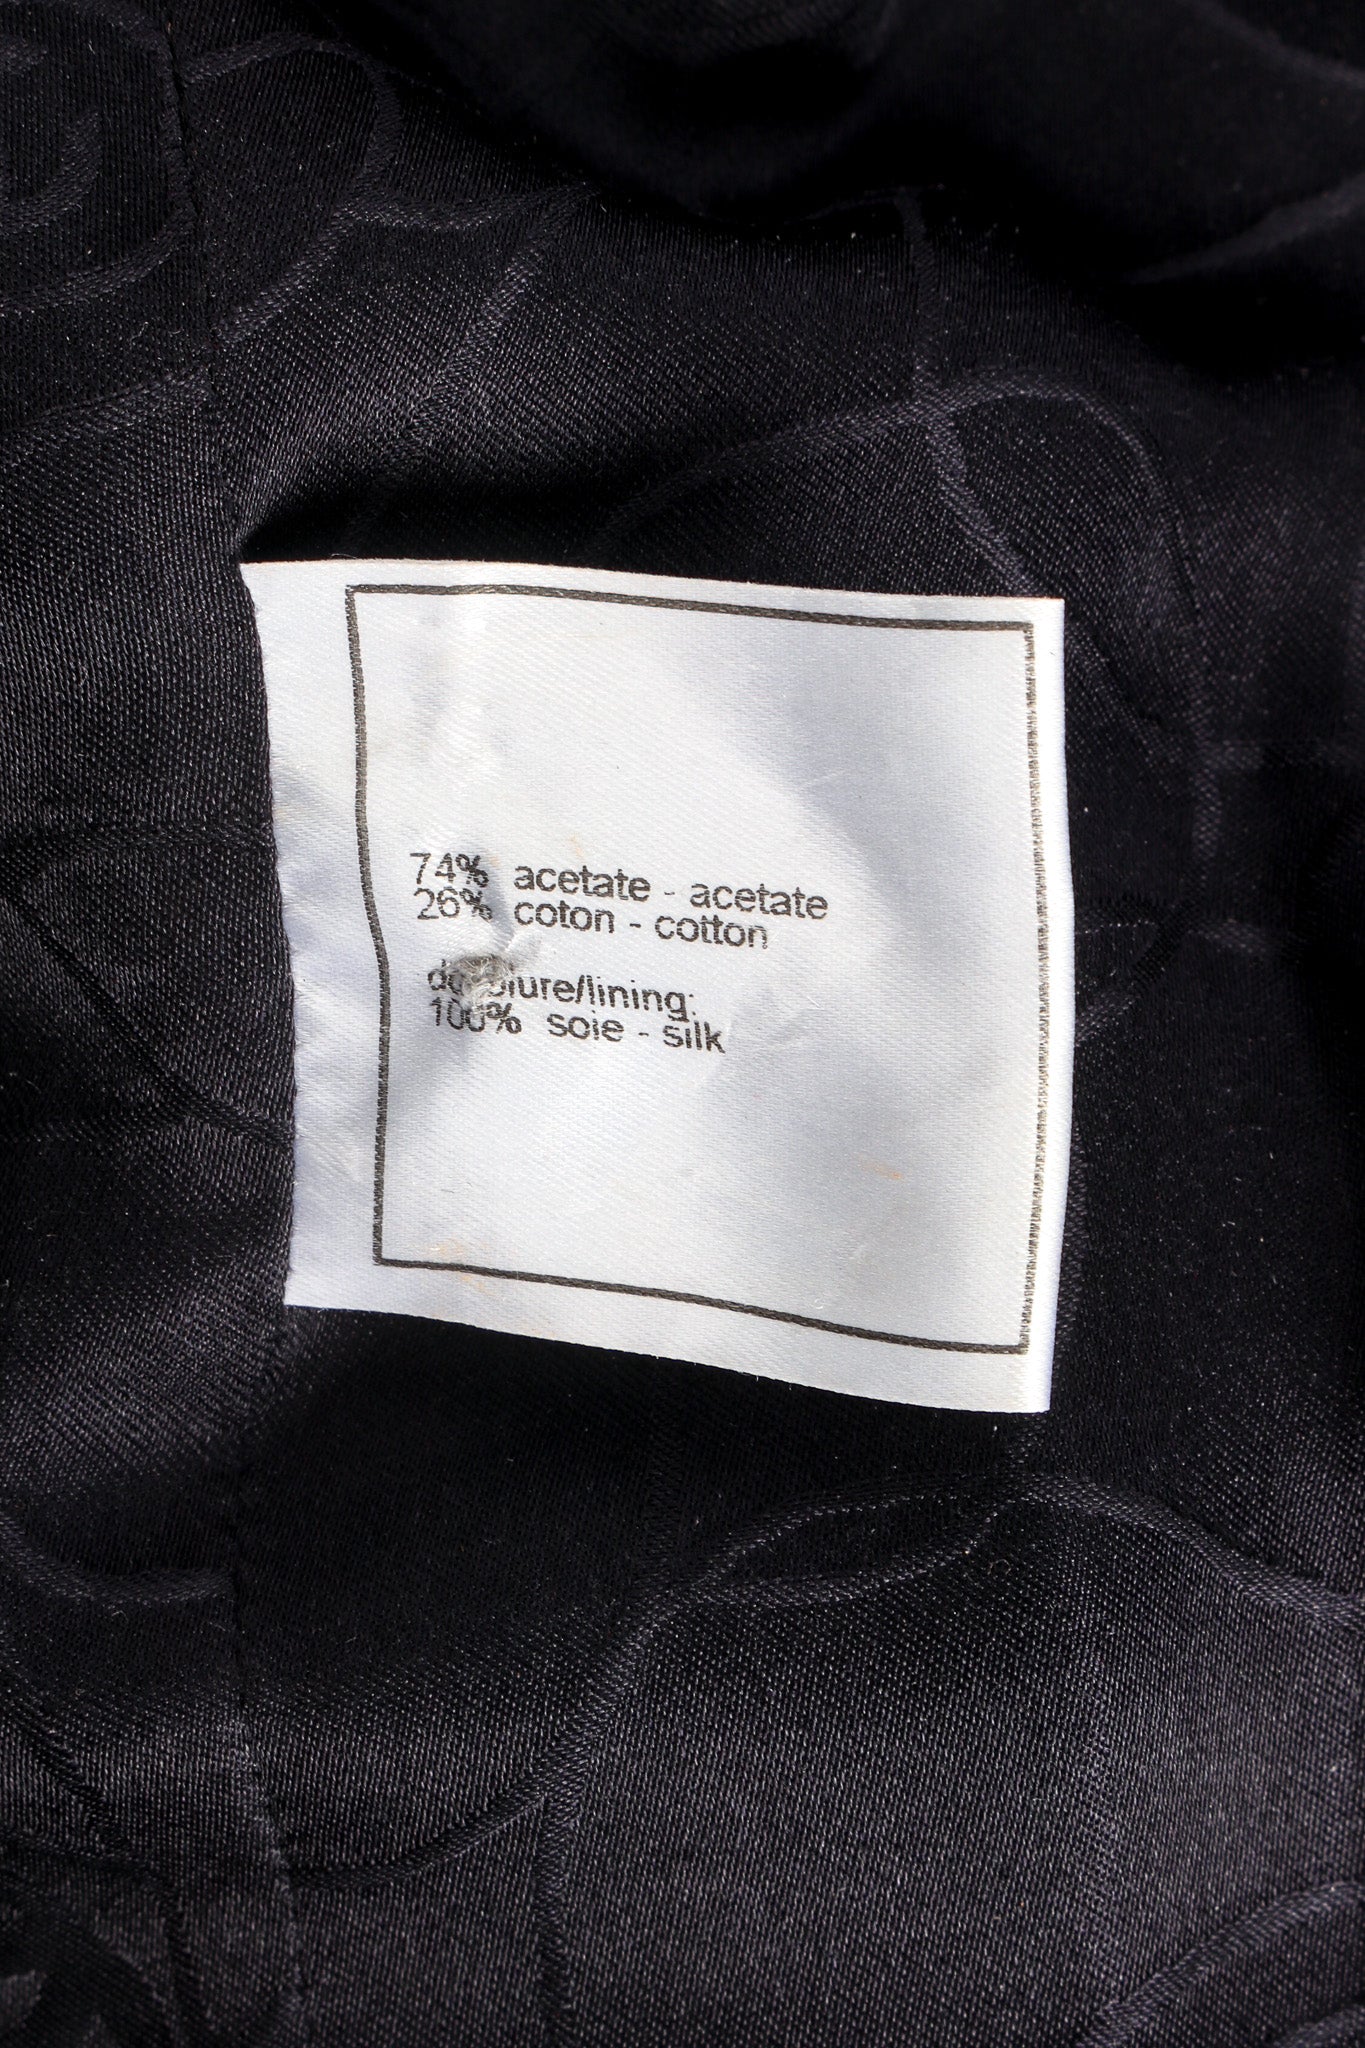 Vintage Chanel 2001 S/S Herringbone Crop Jacket fabric content tag @ Recess LA